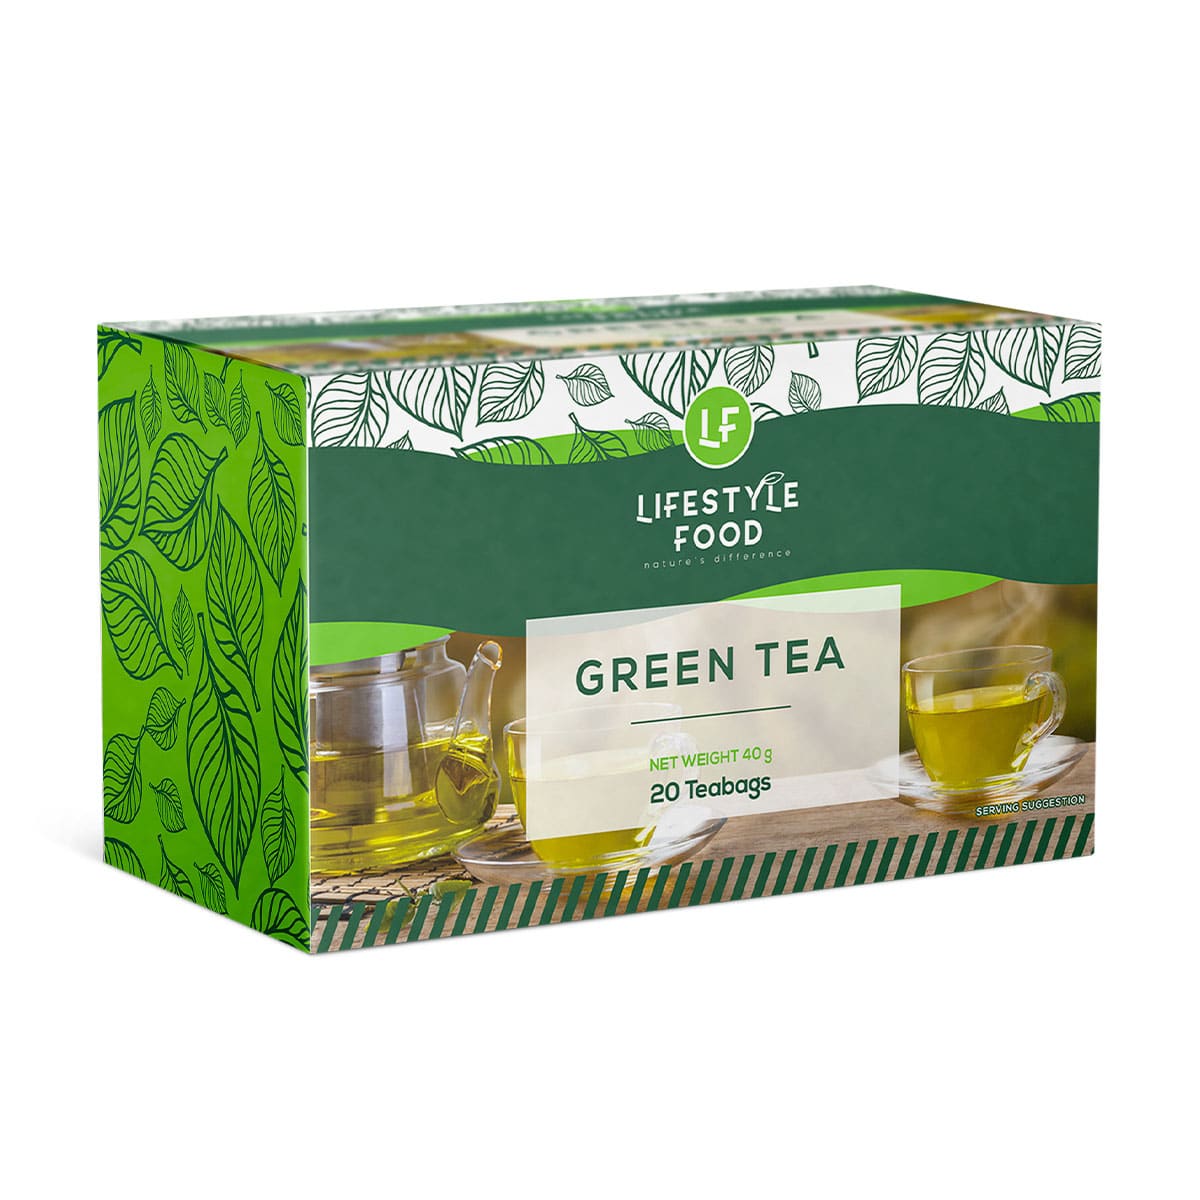 Lifestyle Food Green Tea - 20 Teabags